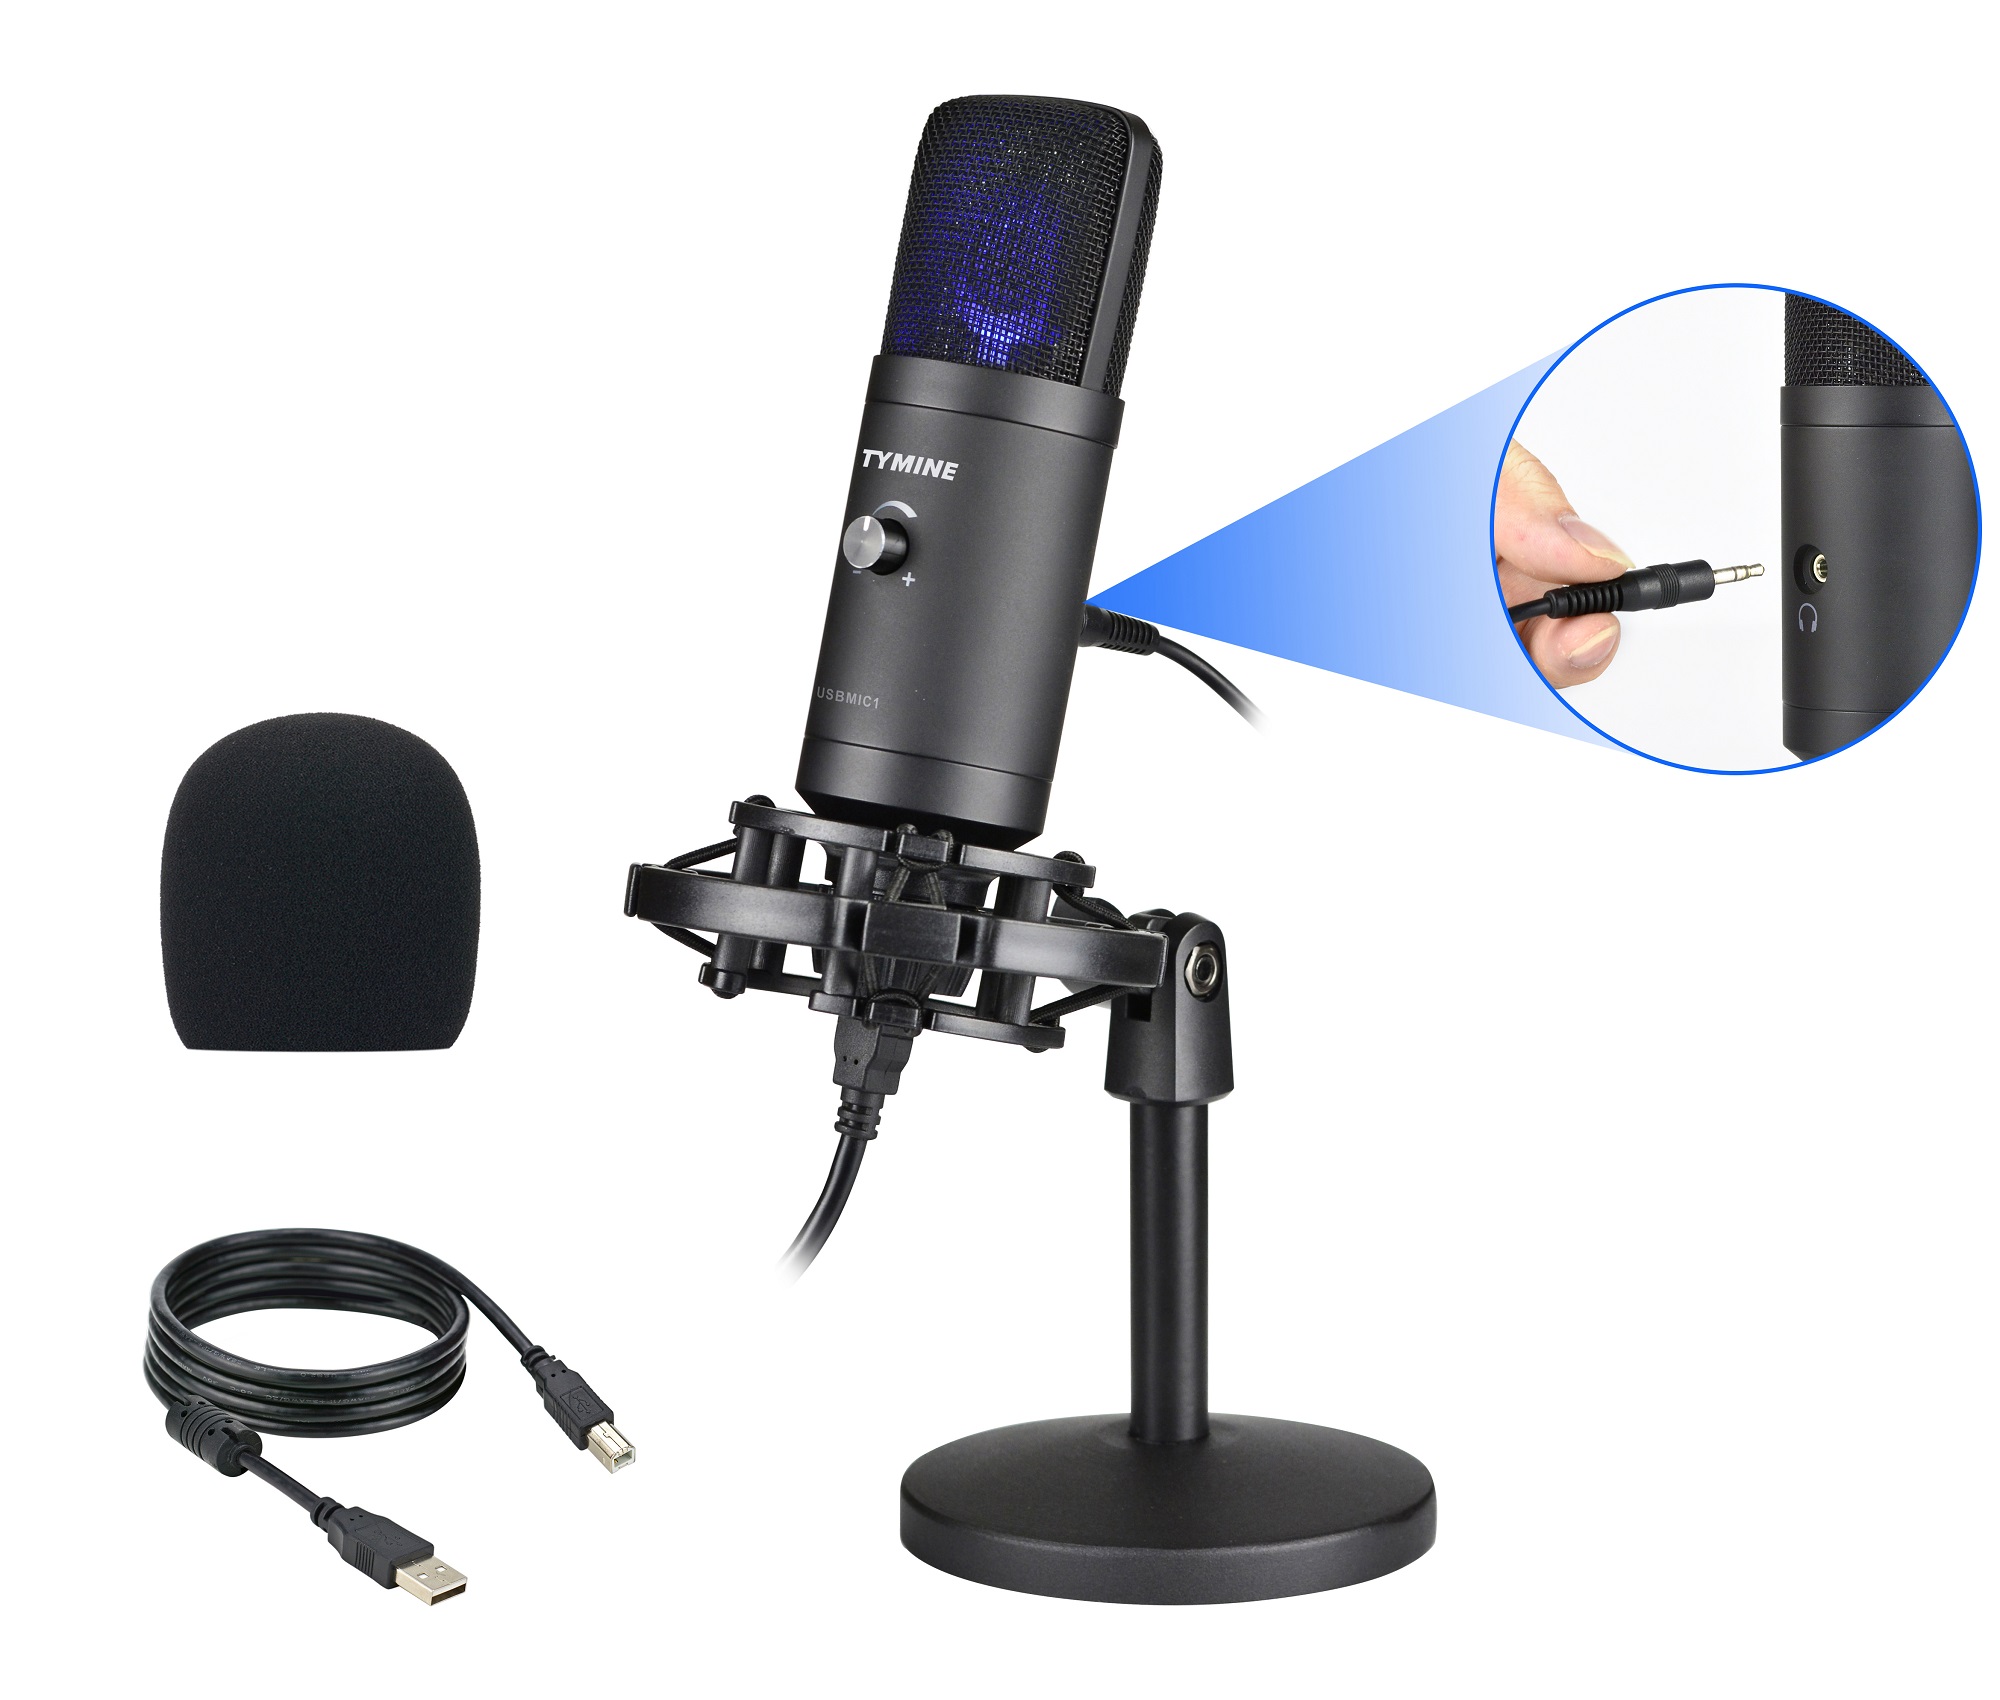 USB microphone Studio microphone with volume control and headphone jack